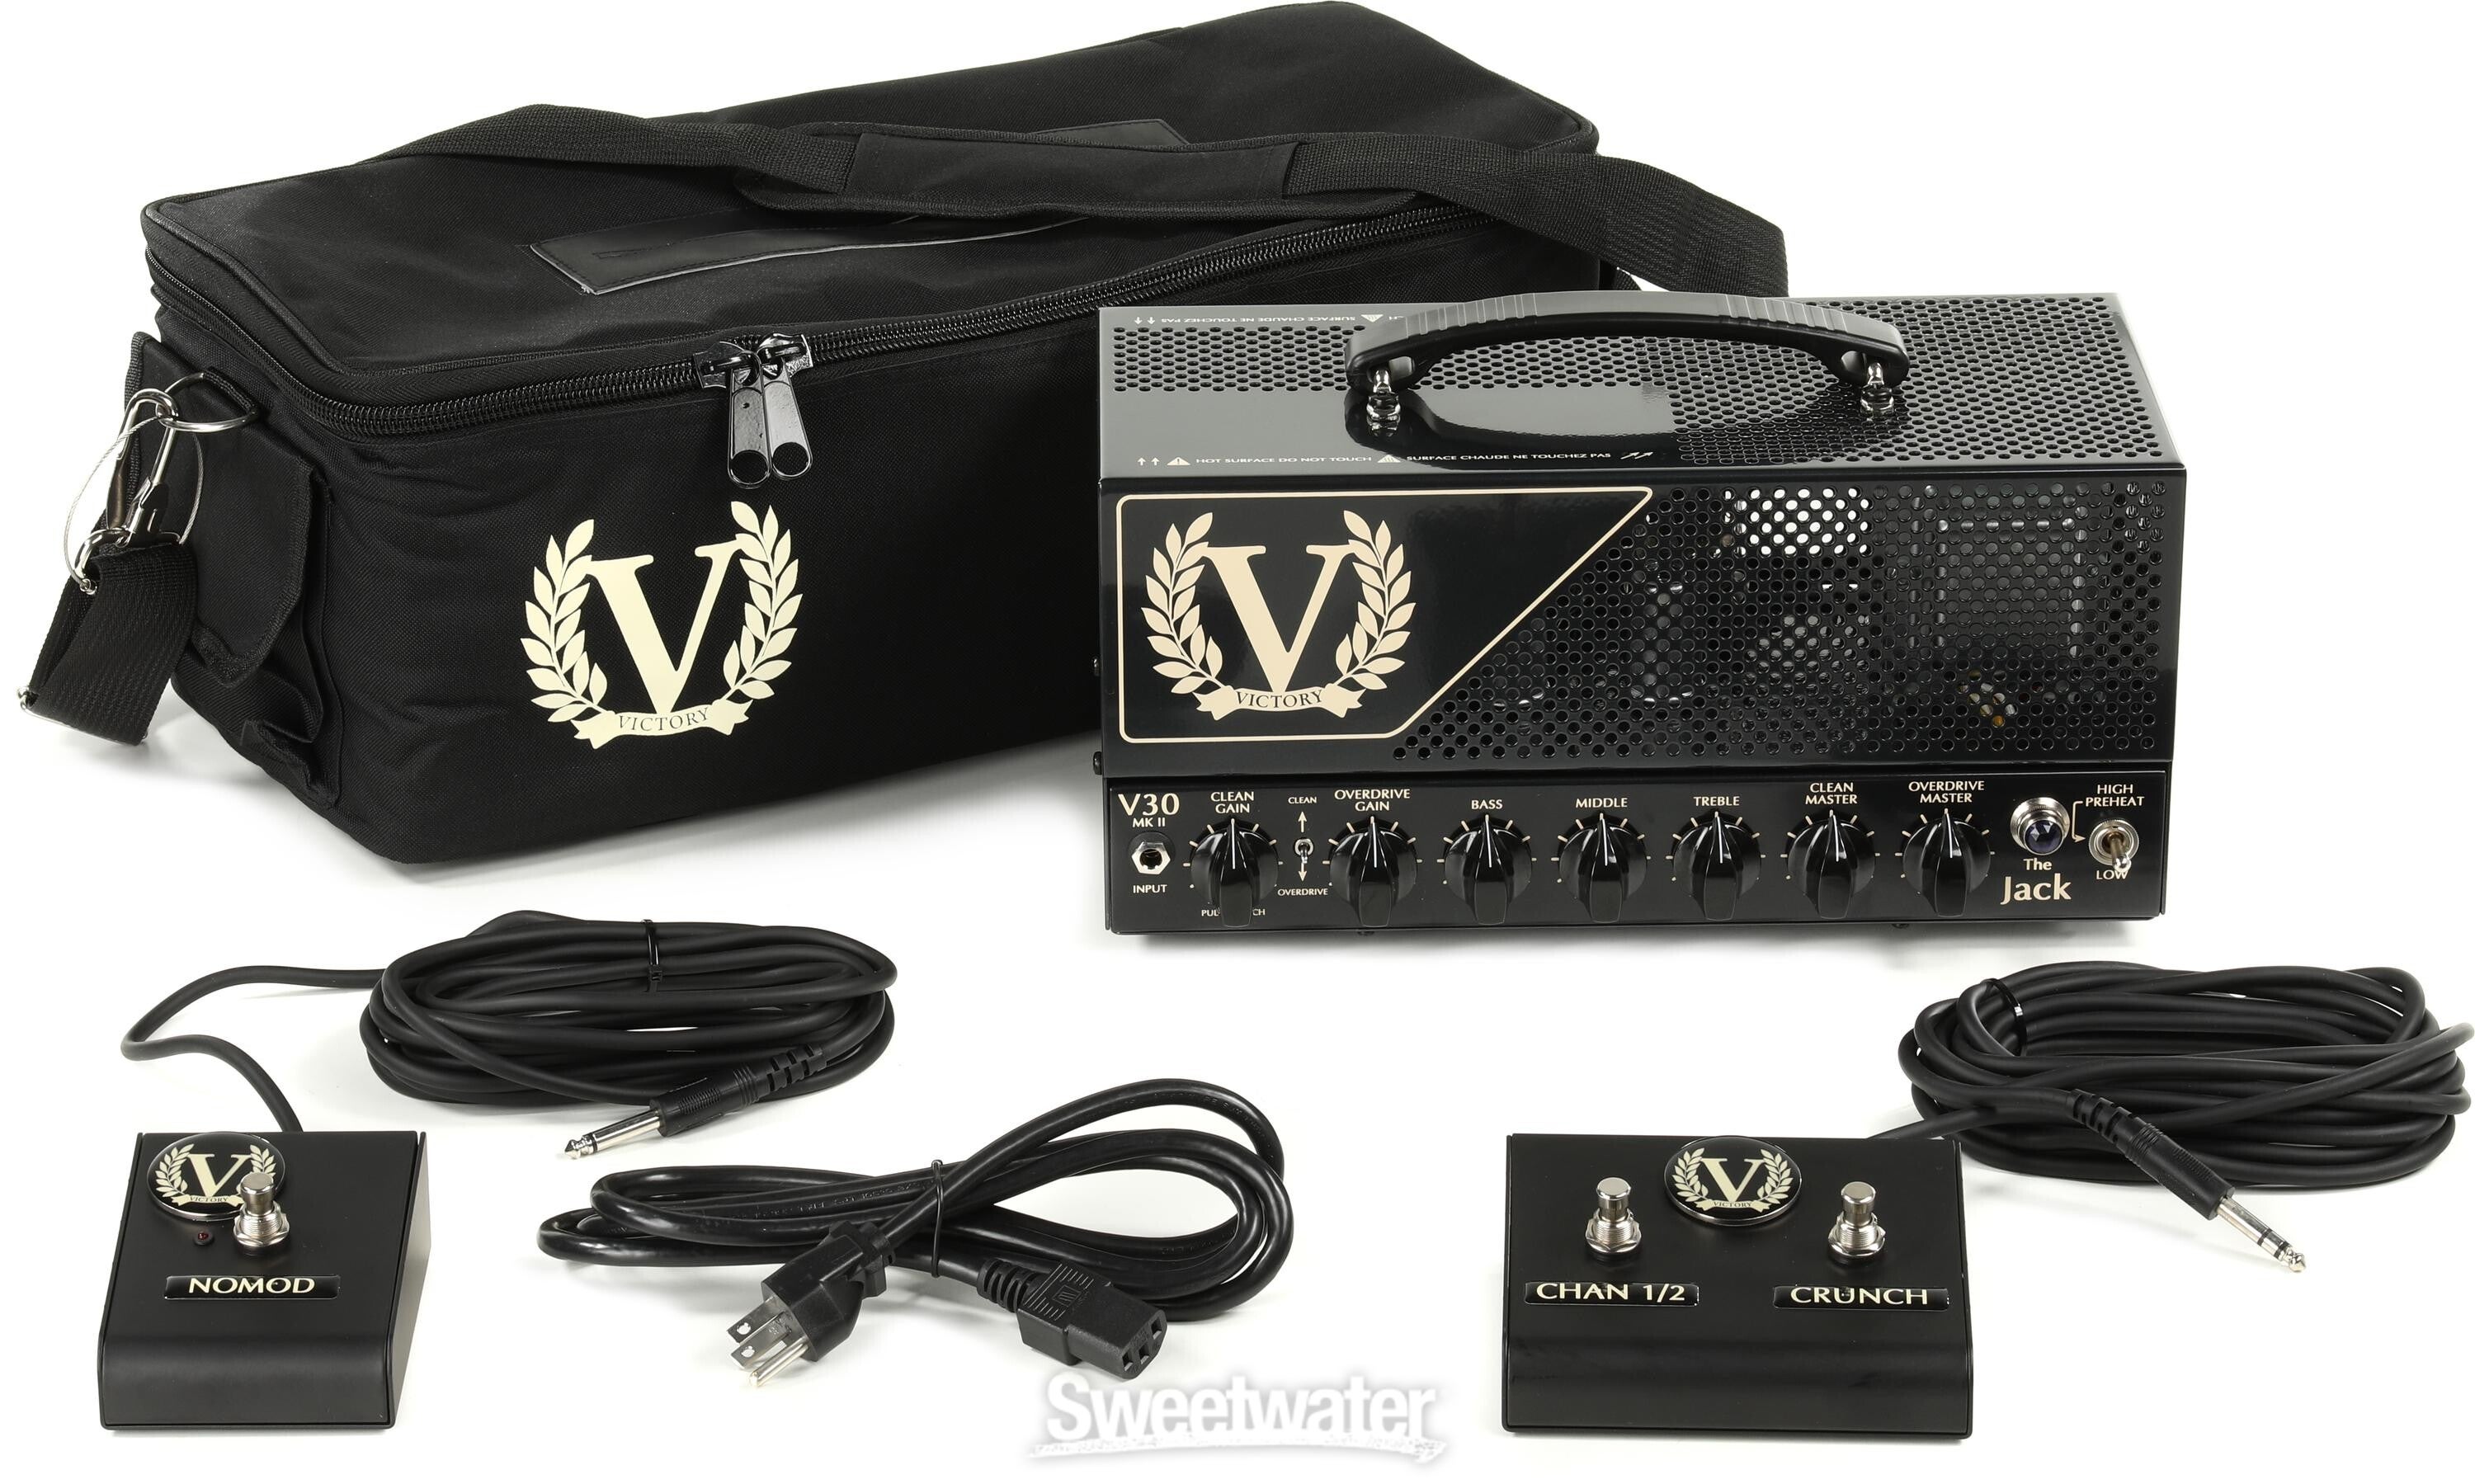 Victory Amplification V30 The Jack MKII 40-watt Tube Guitar Amp